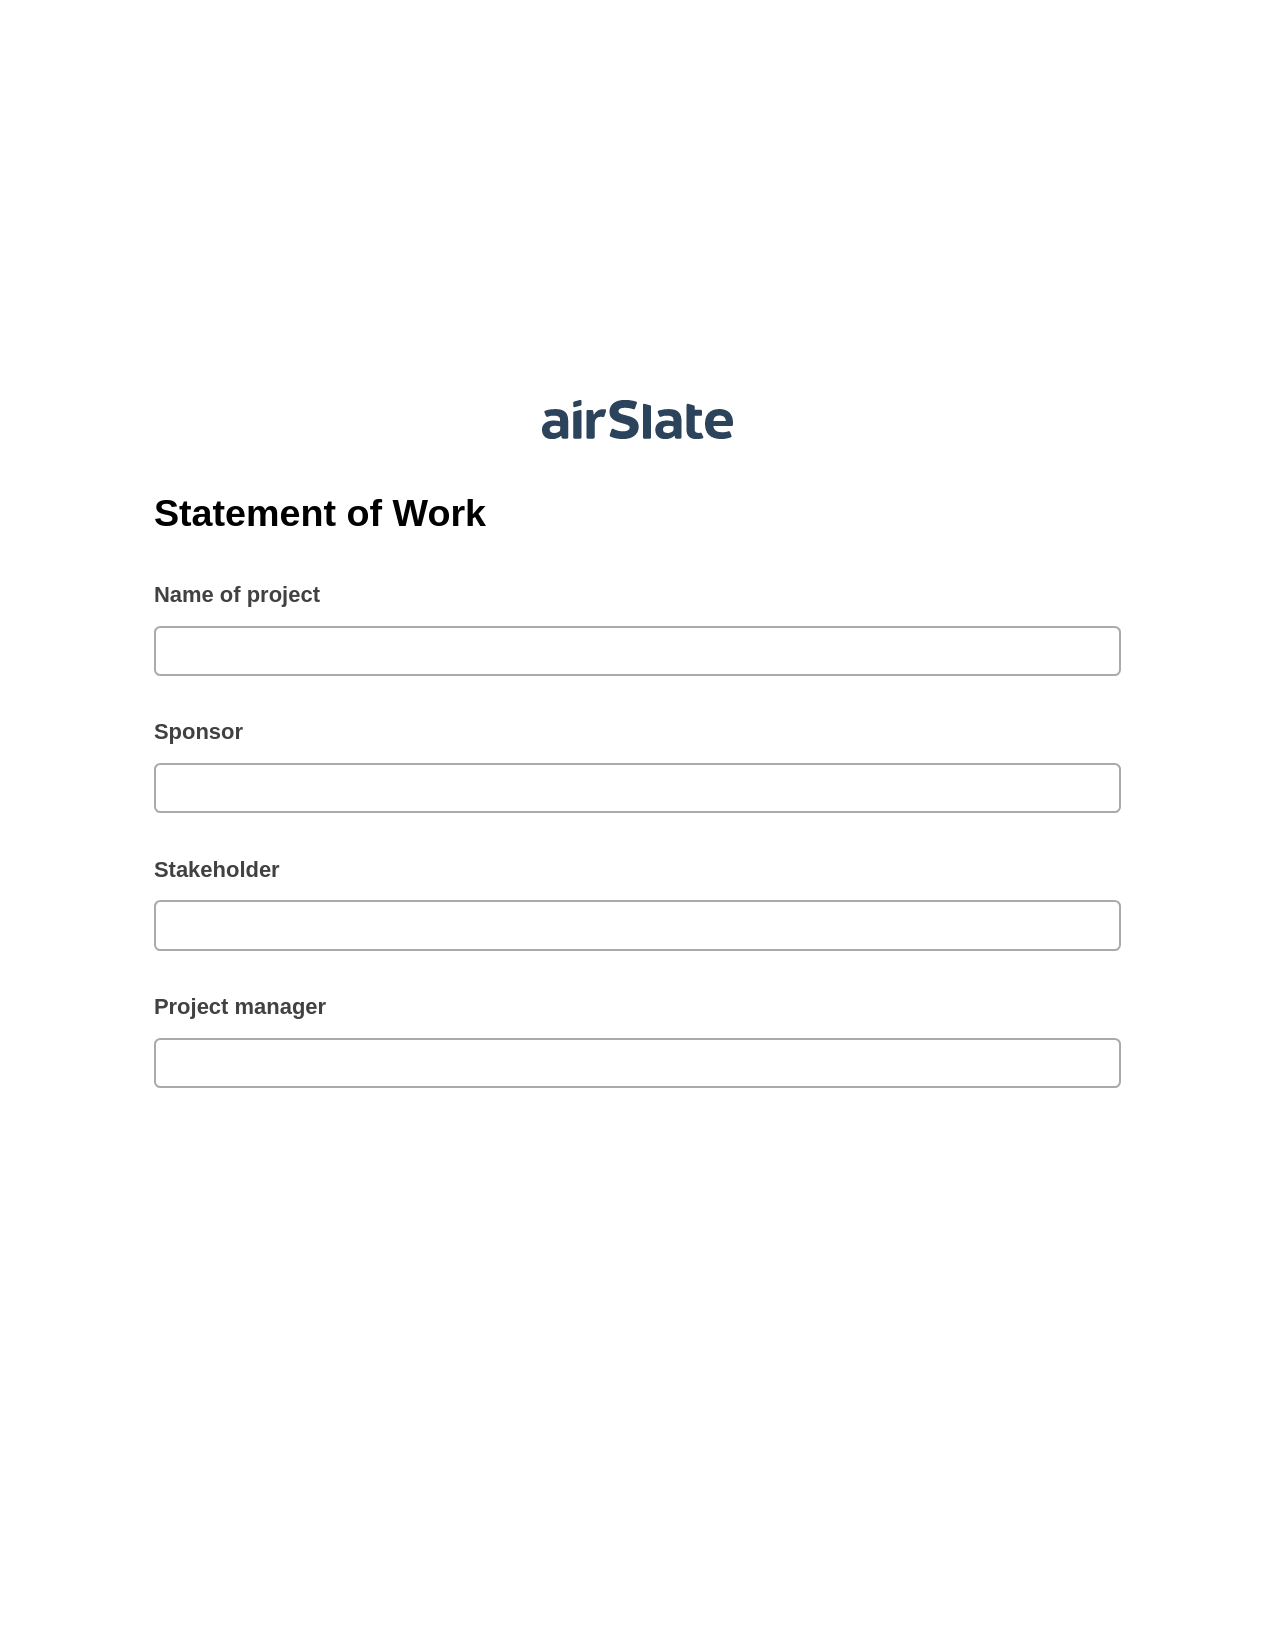 Statement of Work Pre-fill from Salesforce Record Bot, Slack Notification Bot, Box Bot